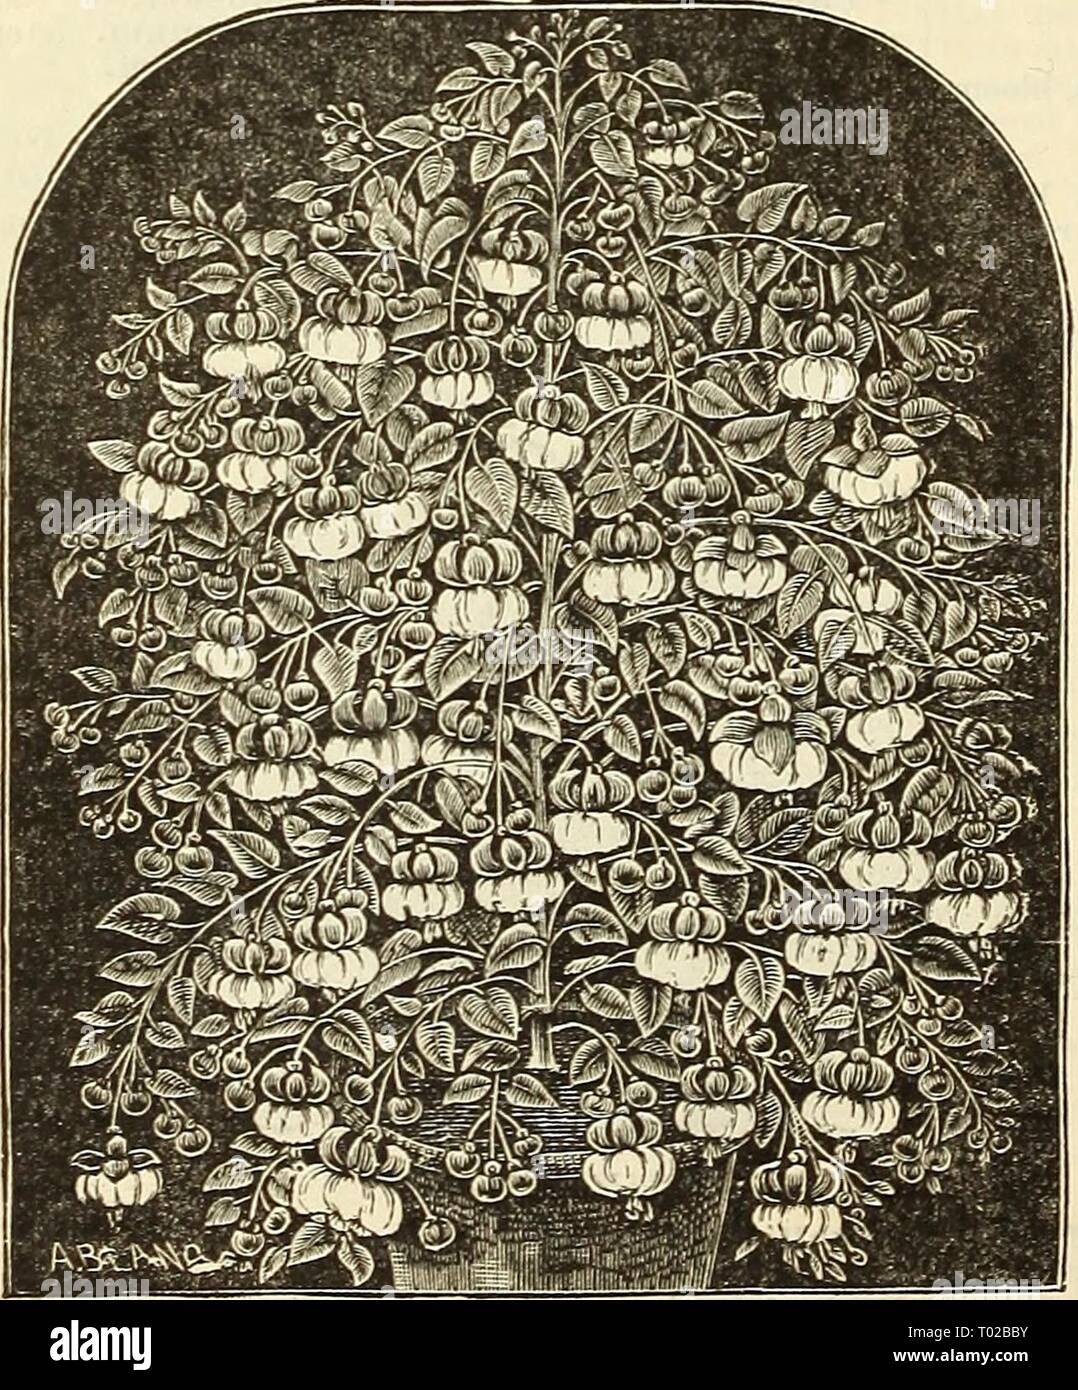 Dreer's garden calendar : 1886 . dreersgardencale1886henr Year: 1886  90 DREER'S GARDEN CALENDAR. FERNS- Gymnogramma chrysophylla (Golden Ferri). Peruviana argyrophylla. Finest silver fern. Decomposita. Sulphurca (Sulphur Fern). Lomaria Gibba. oO cts. each. Microlepia hirta cristata. An elegant «rested fern of good habit and irrowtli. 5t) cts. each. Nephrolepis exaltata. Strong grower. Davalloides furcaiis. A heantifiil and ornamen- tal crested fern of ea^y ciiltnre. 50 ets. each. Nephrolepis Uutti (new).' Compact habit. 50 cts. each. Unichuoi iaponicum. Continued, Osmunda japonica corymbosa ( Stock Photo